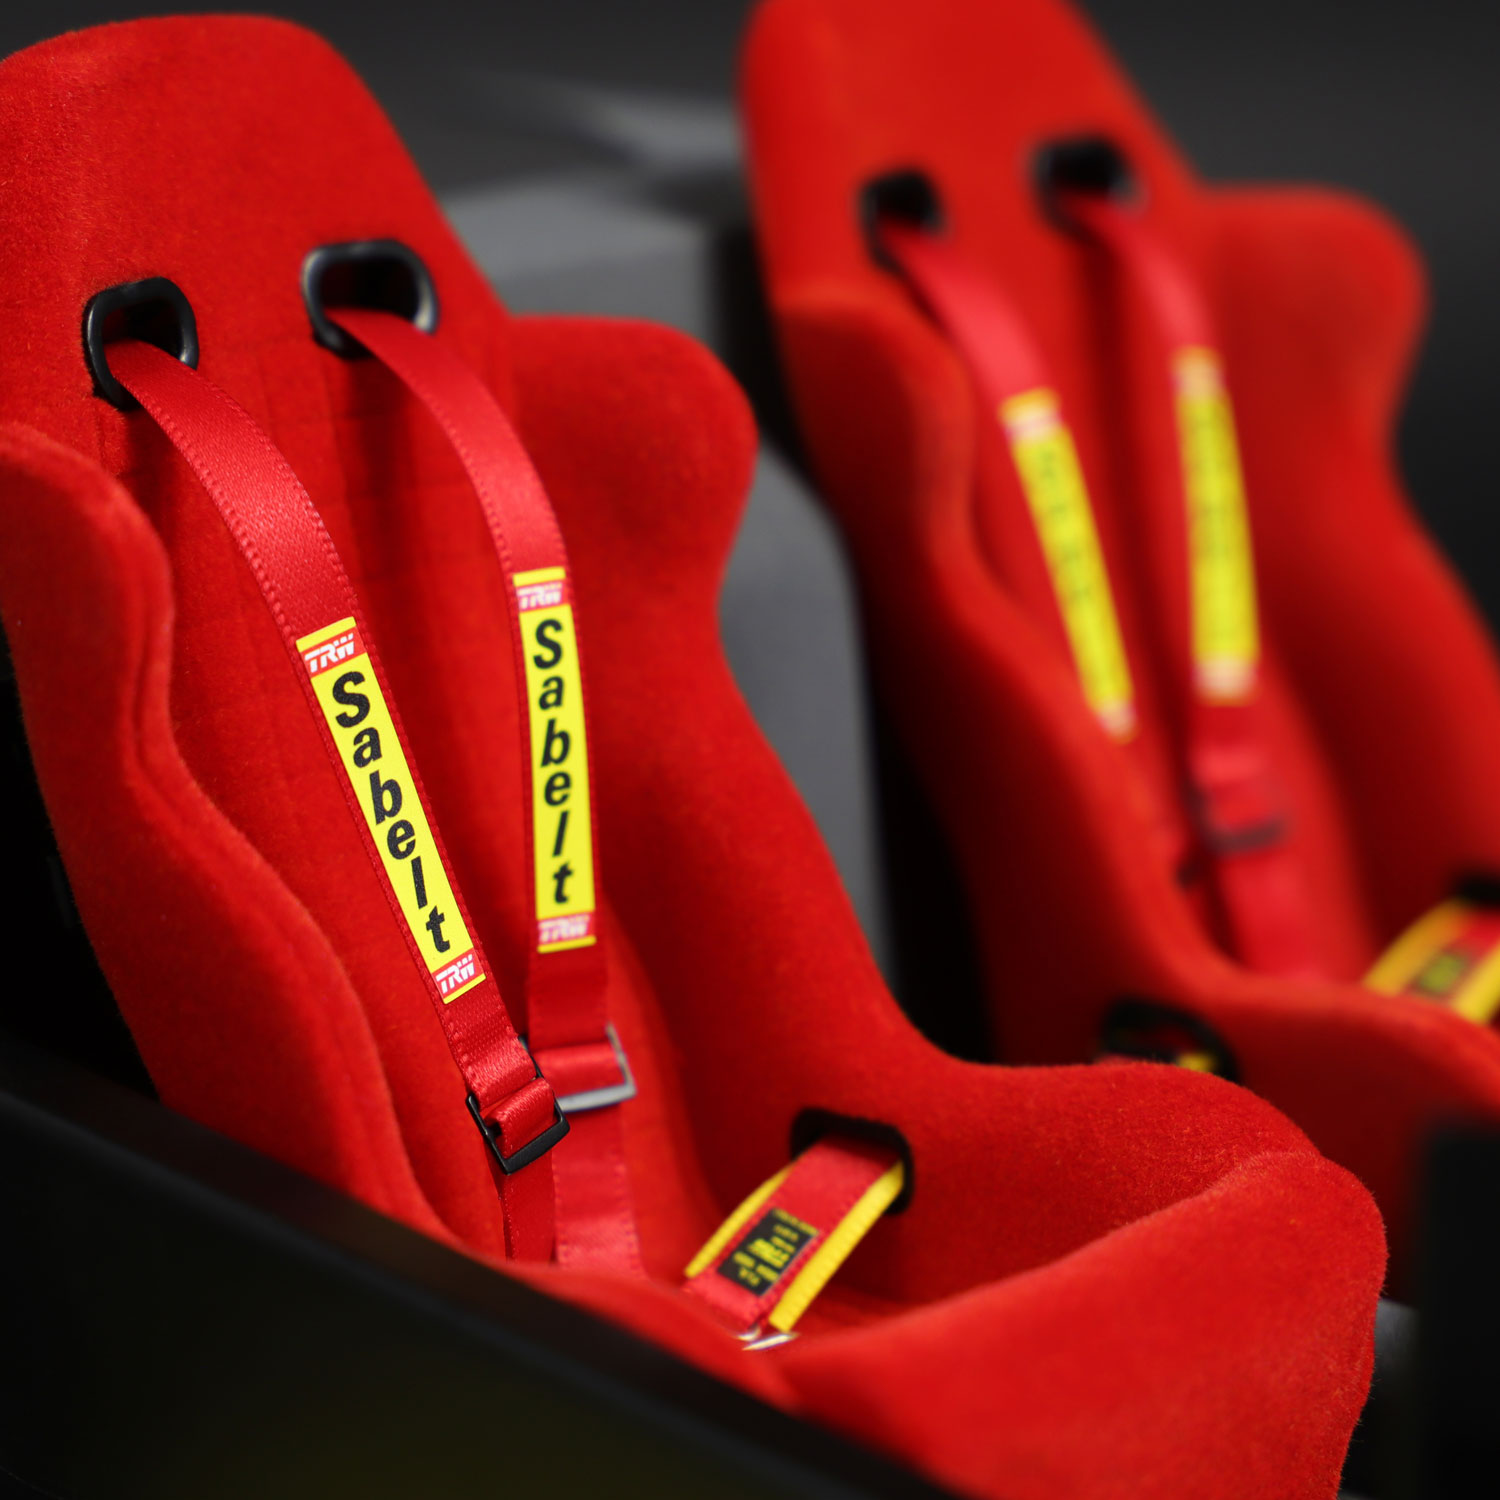 Complete Sabelt Harness Set on seats of Ferrari F40 model